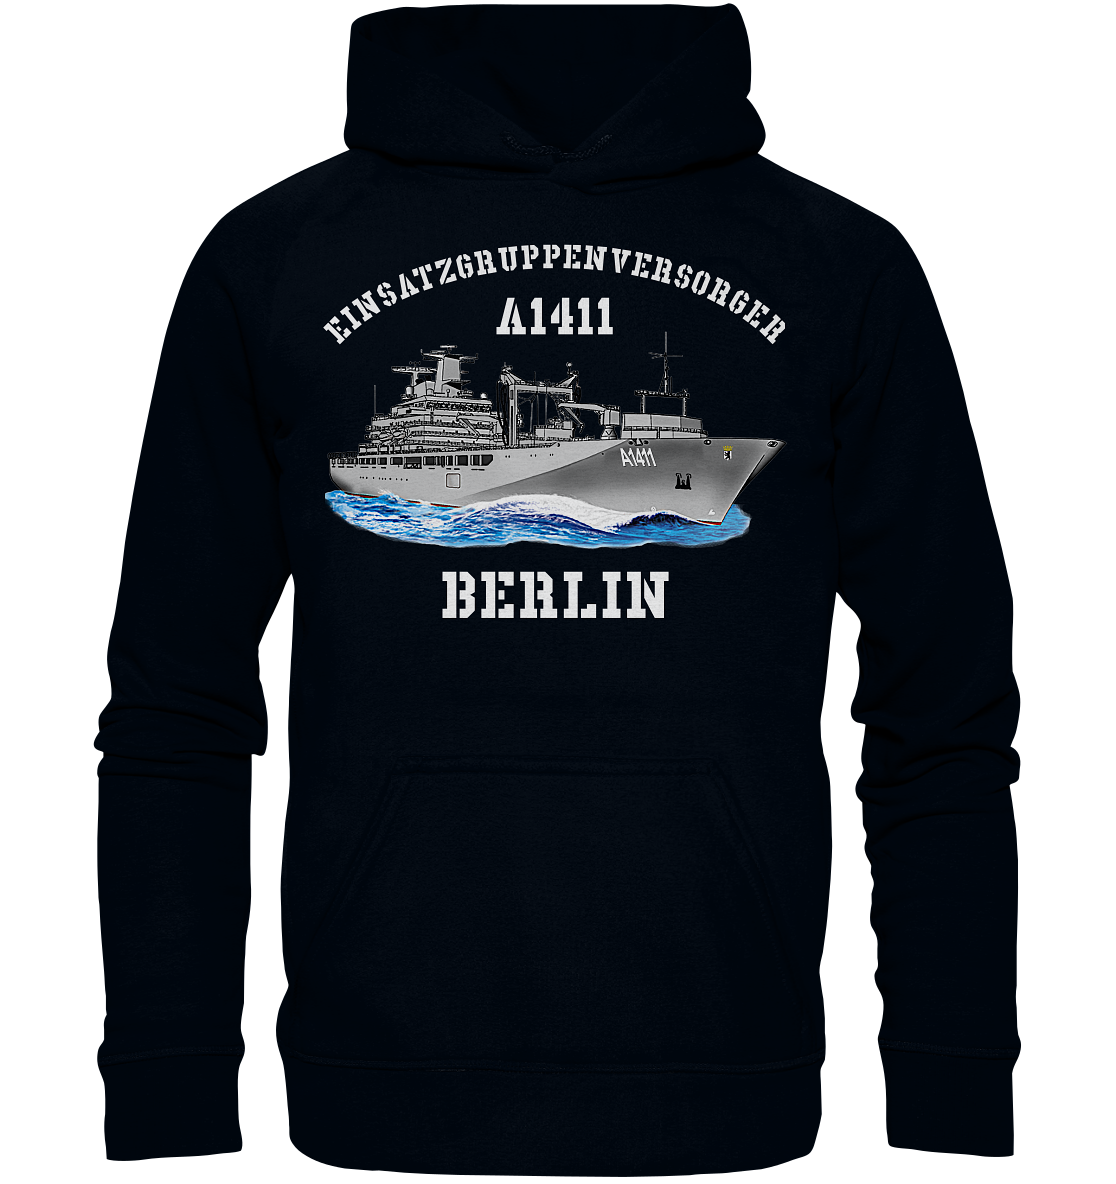 EGV A1411 BERLIN  - Basic Unisex Hoodie XL